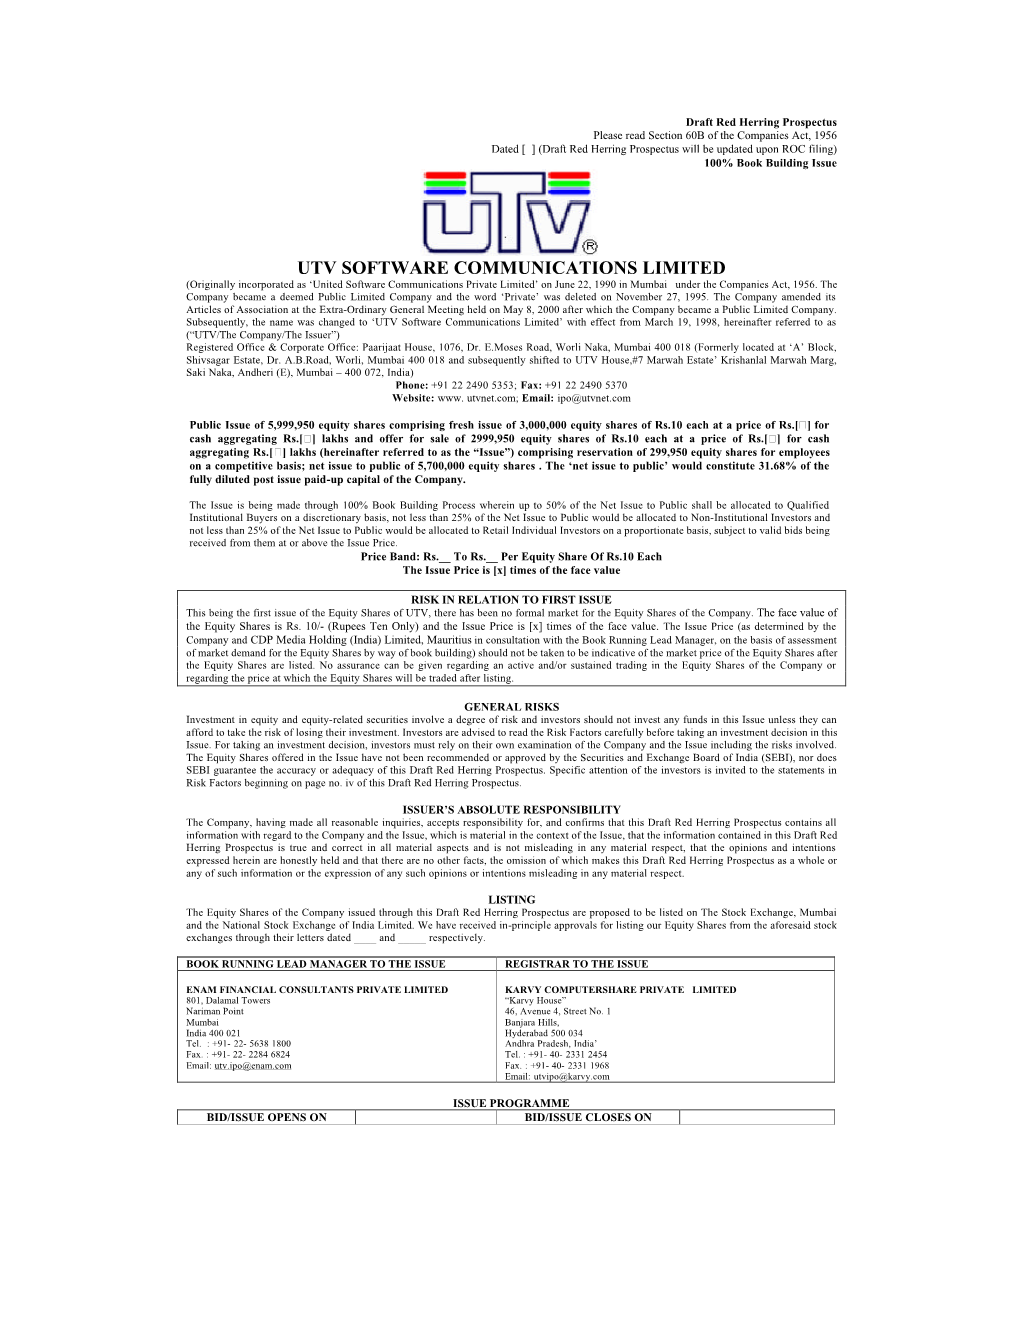 Utv Software Communications Limited